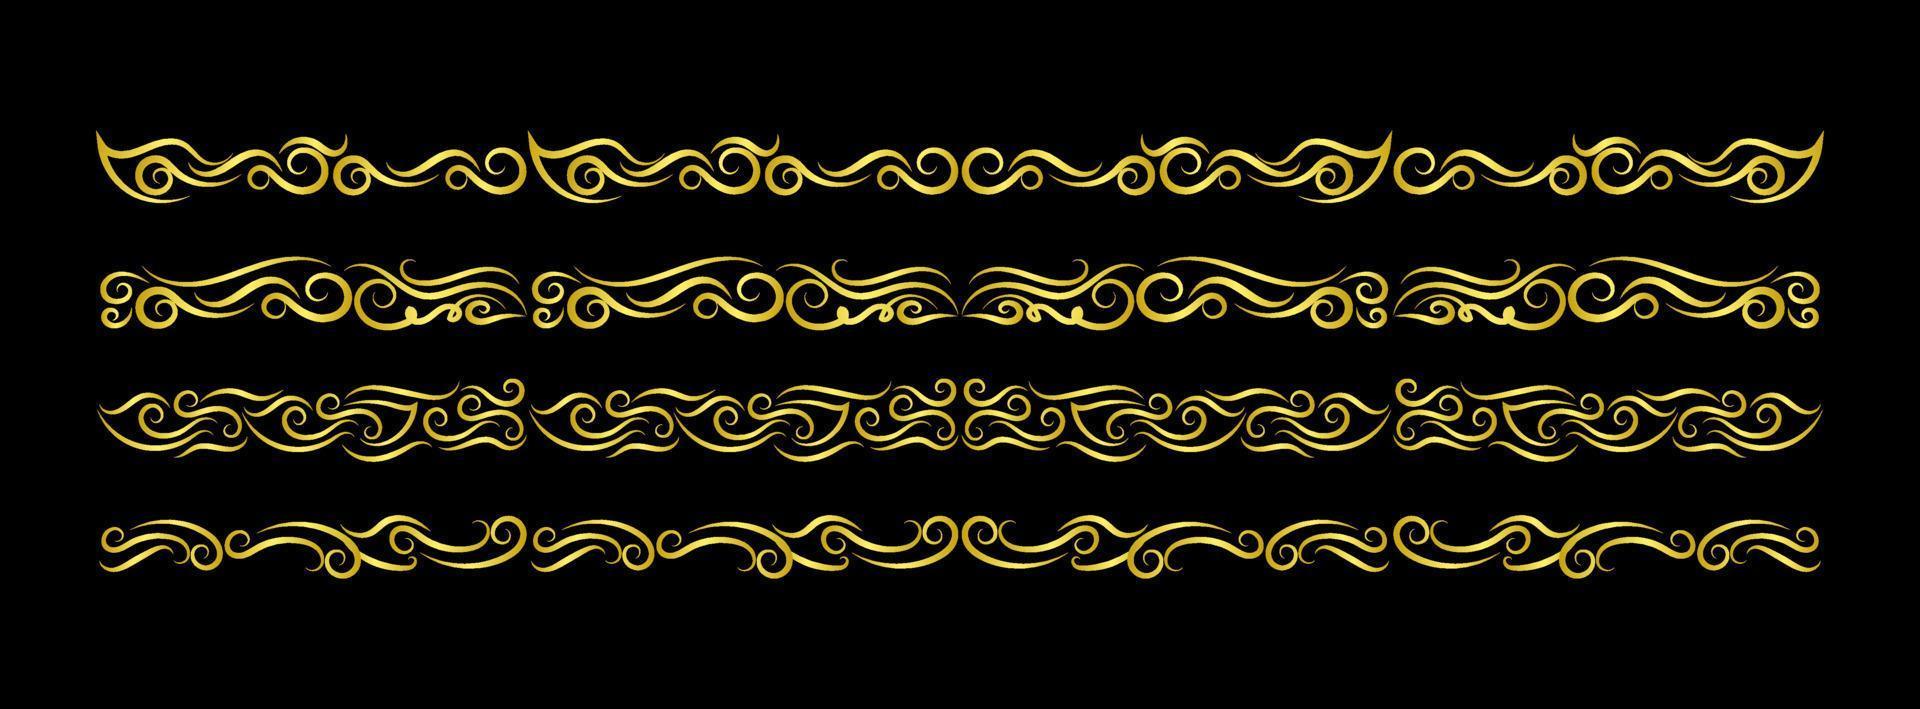 Elements Swirl ornament set vector